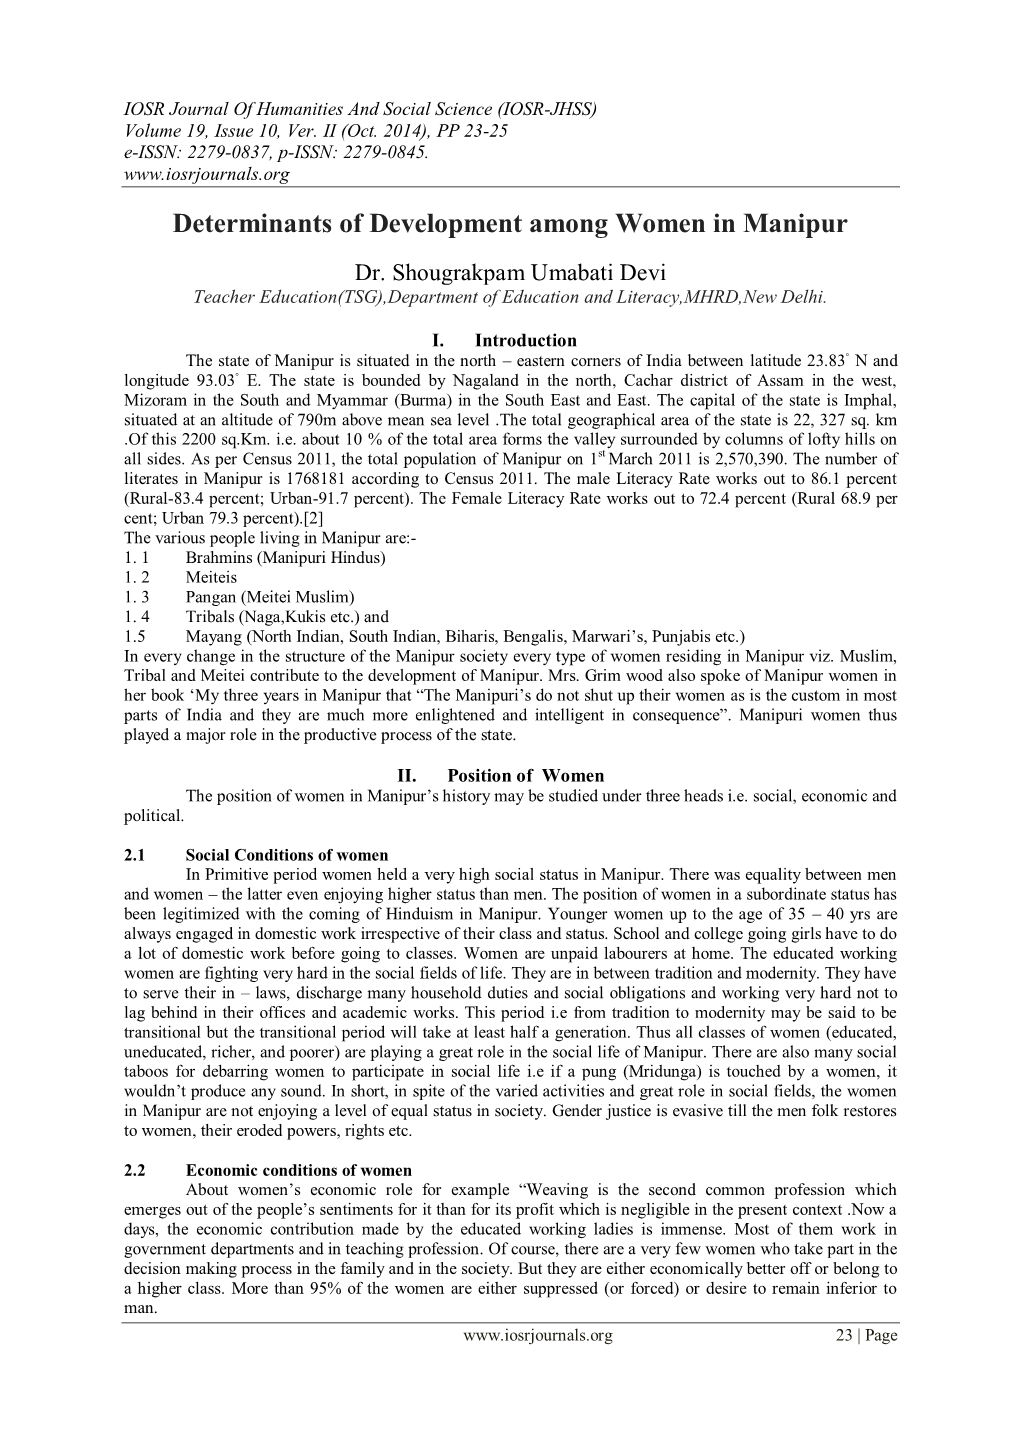 Determinants of Development Among Women in Manipur